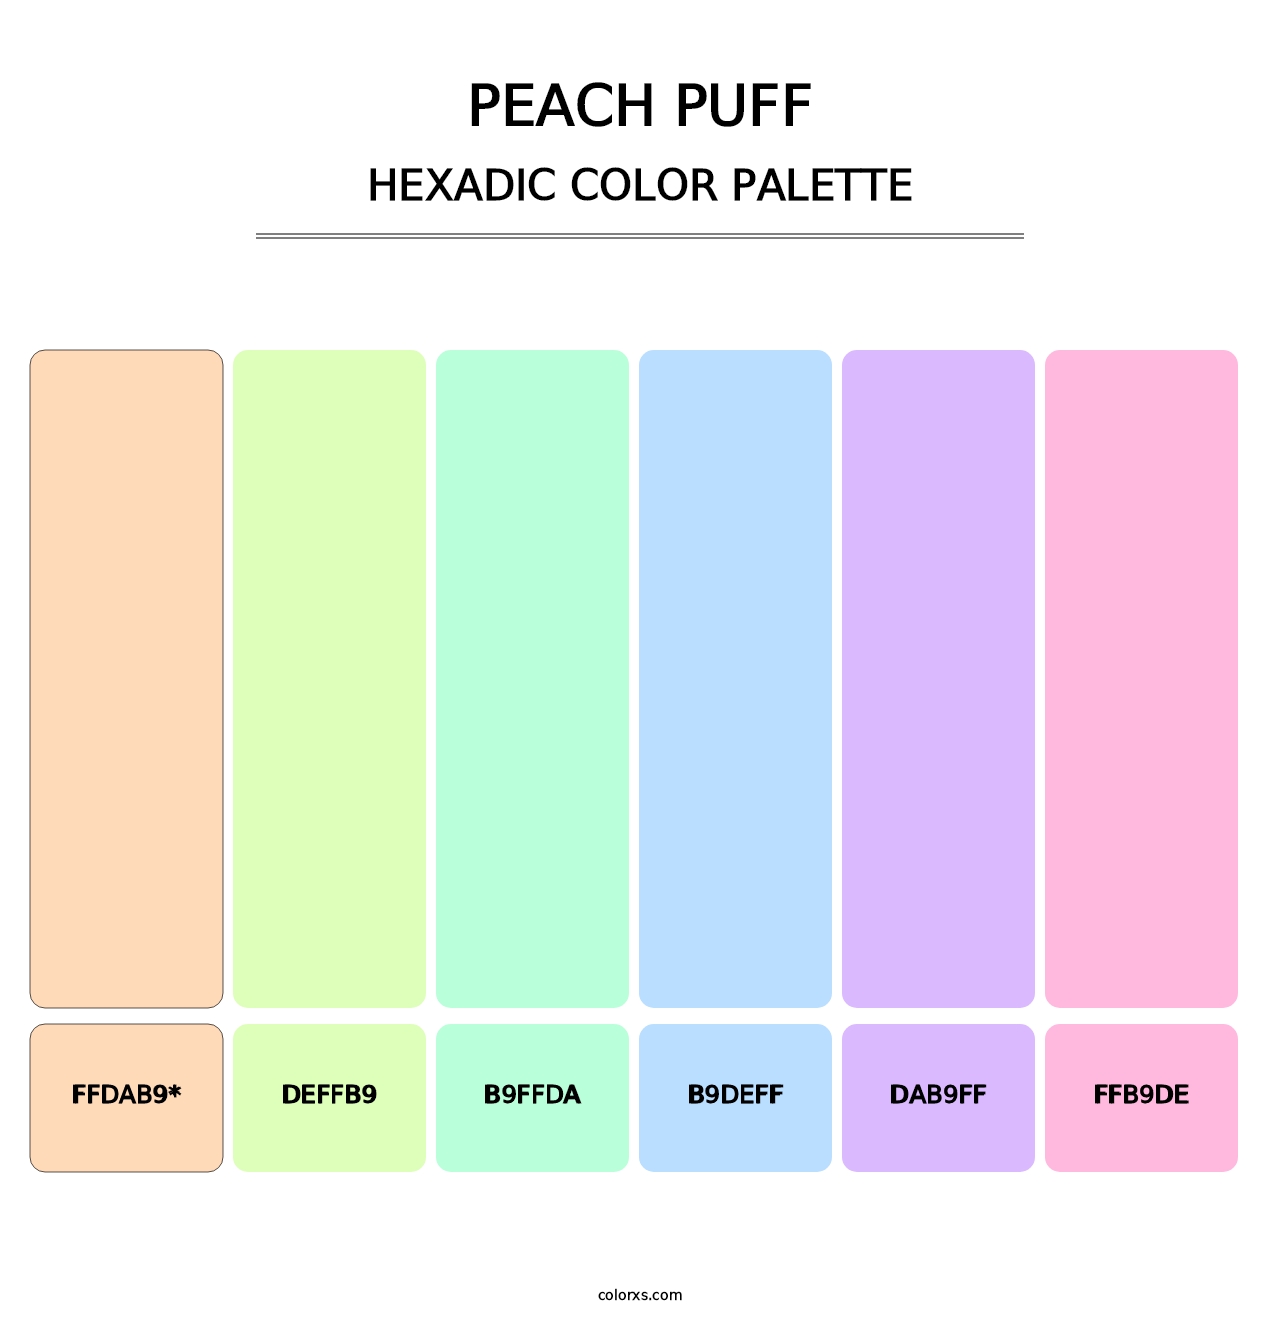 Peach Puff - Hexadic Color Palette